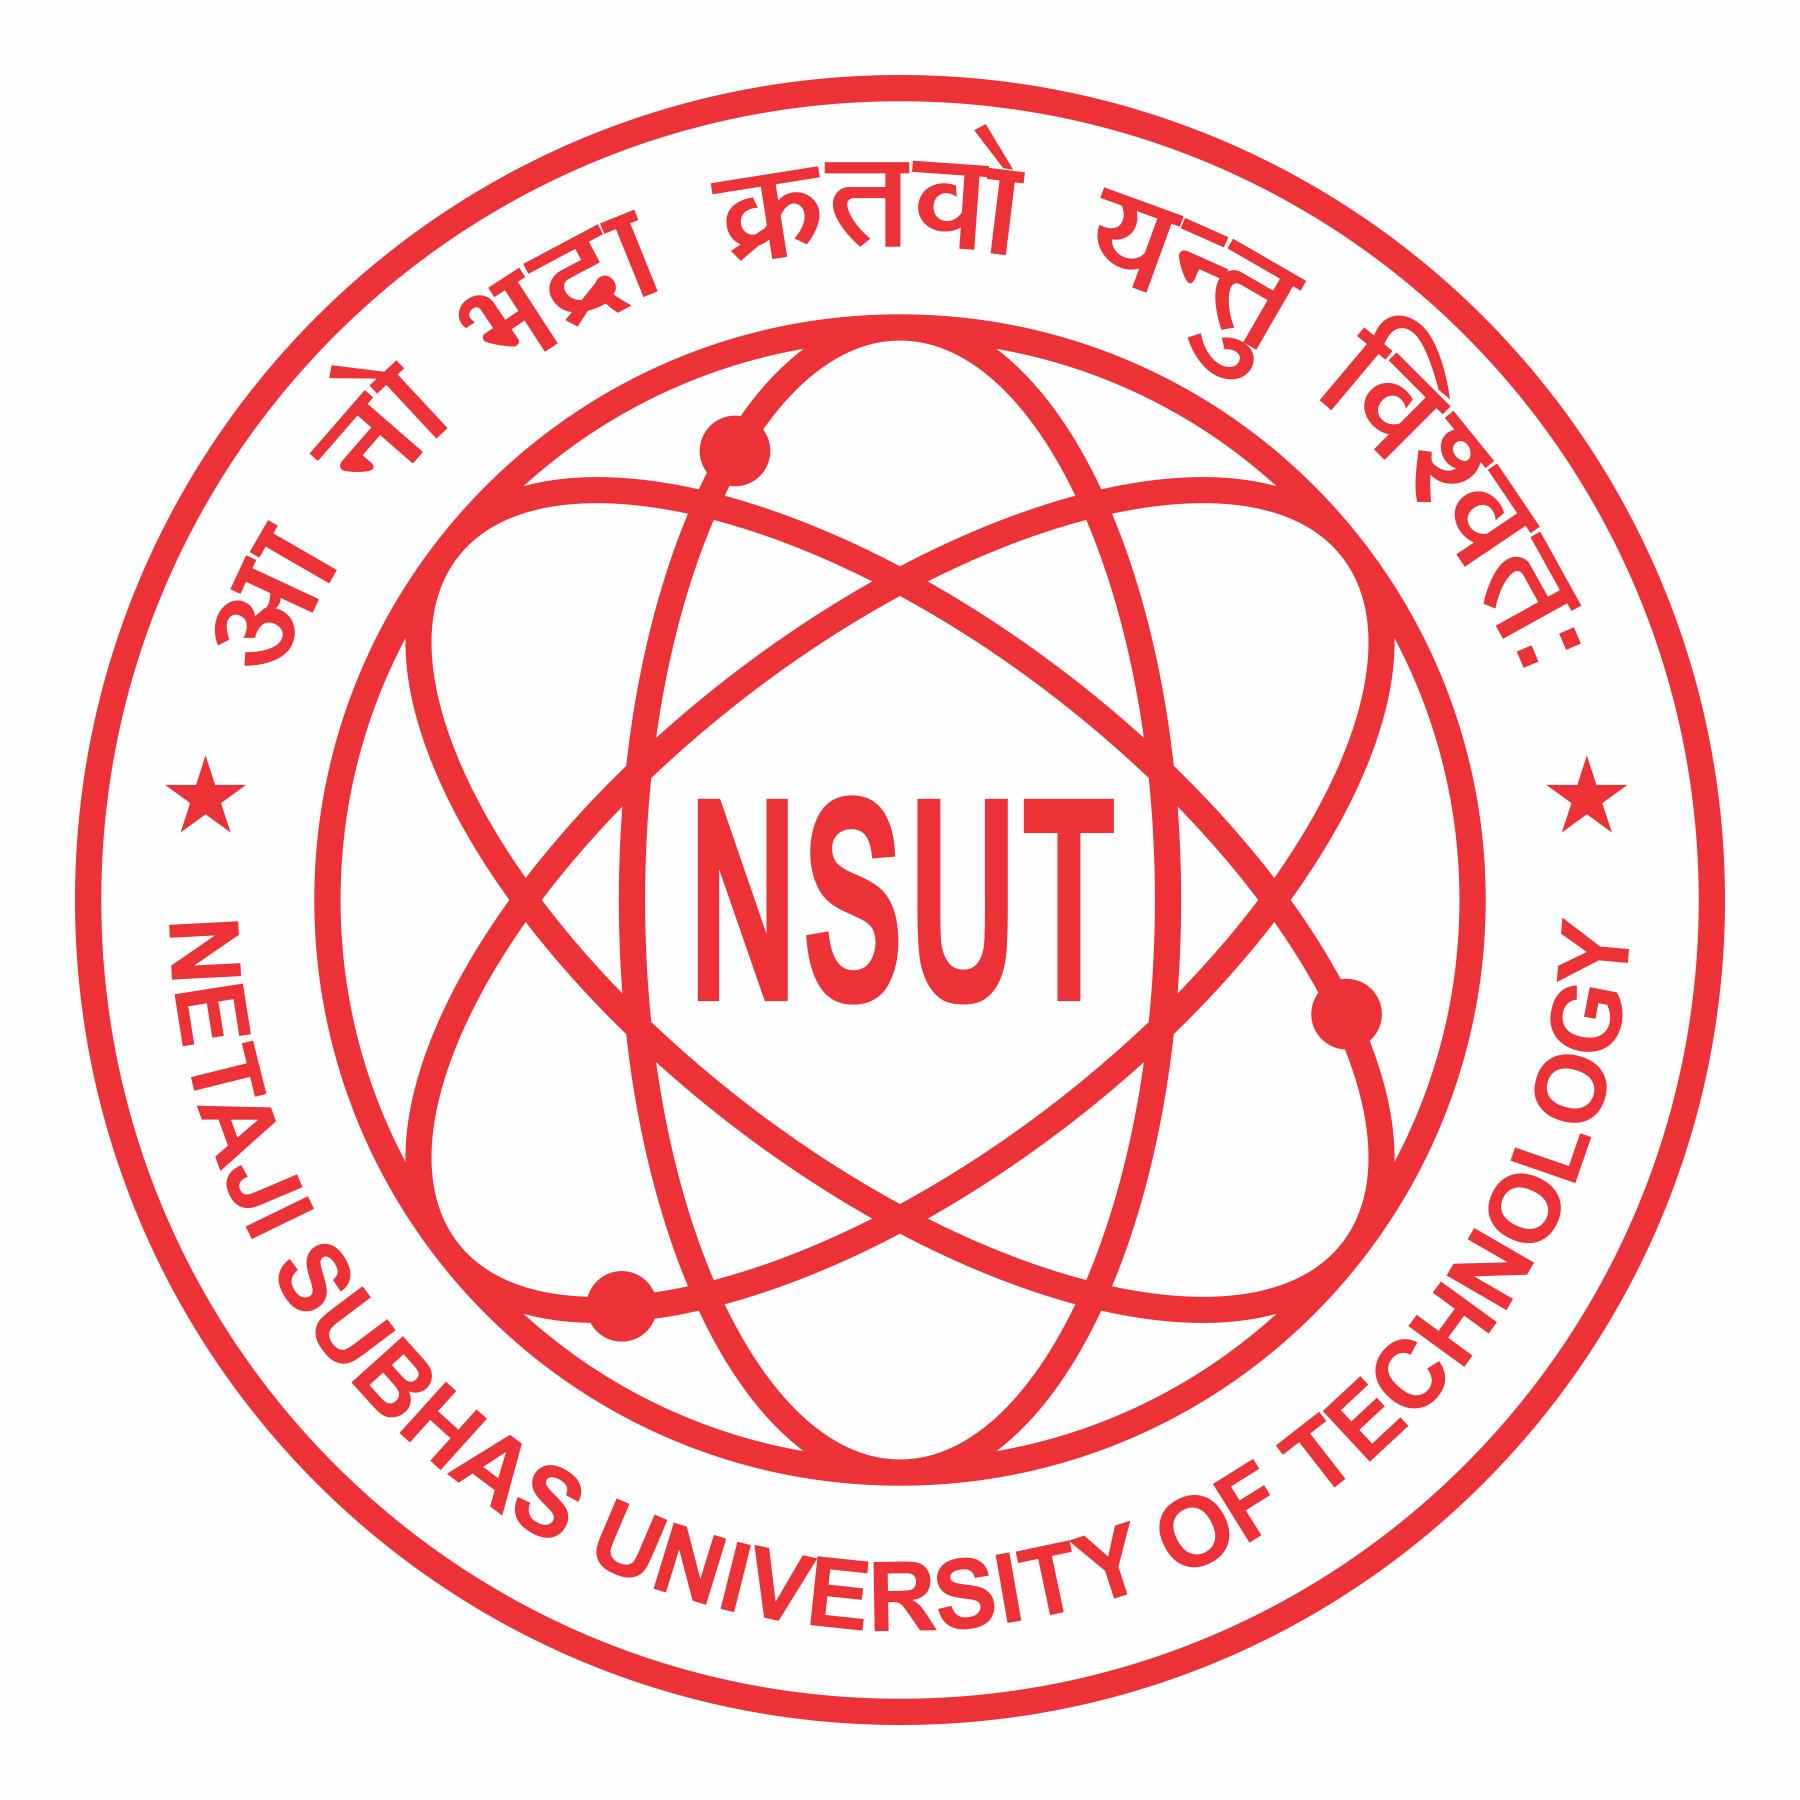 Netaji Subhas University of Technology, Delhi